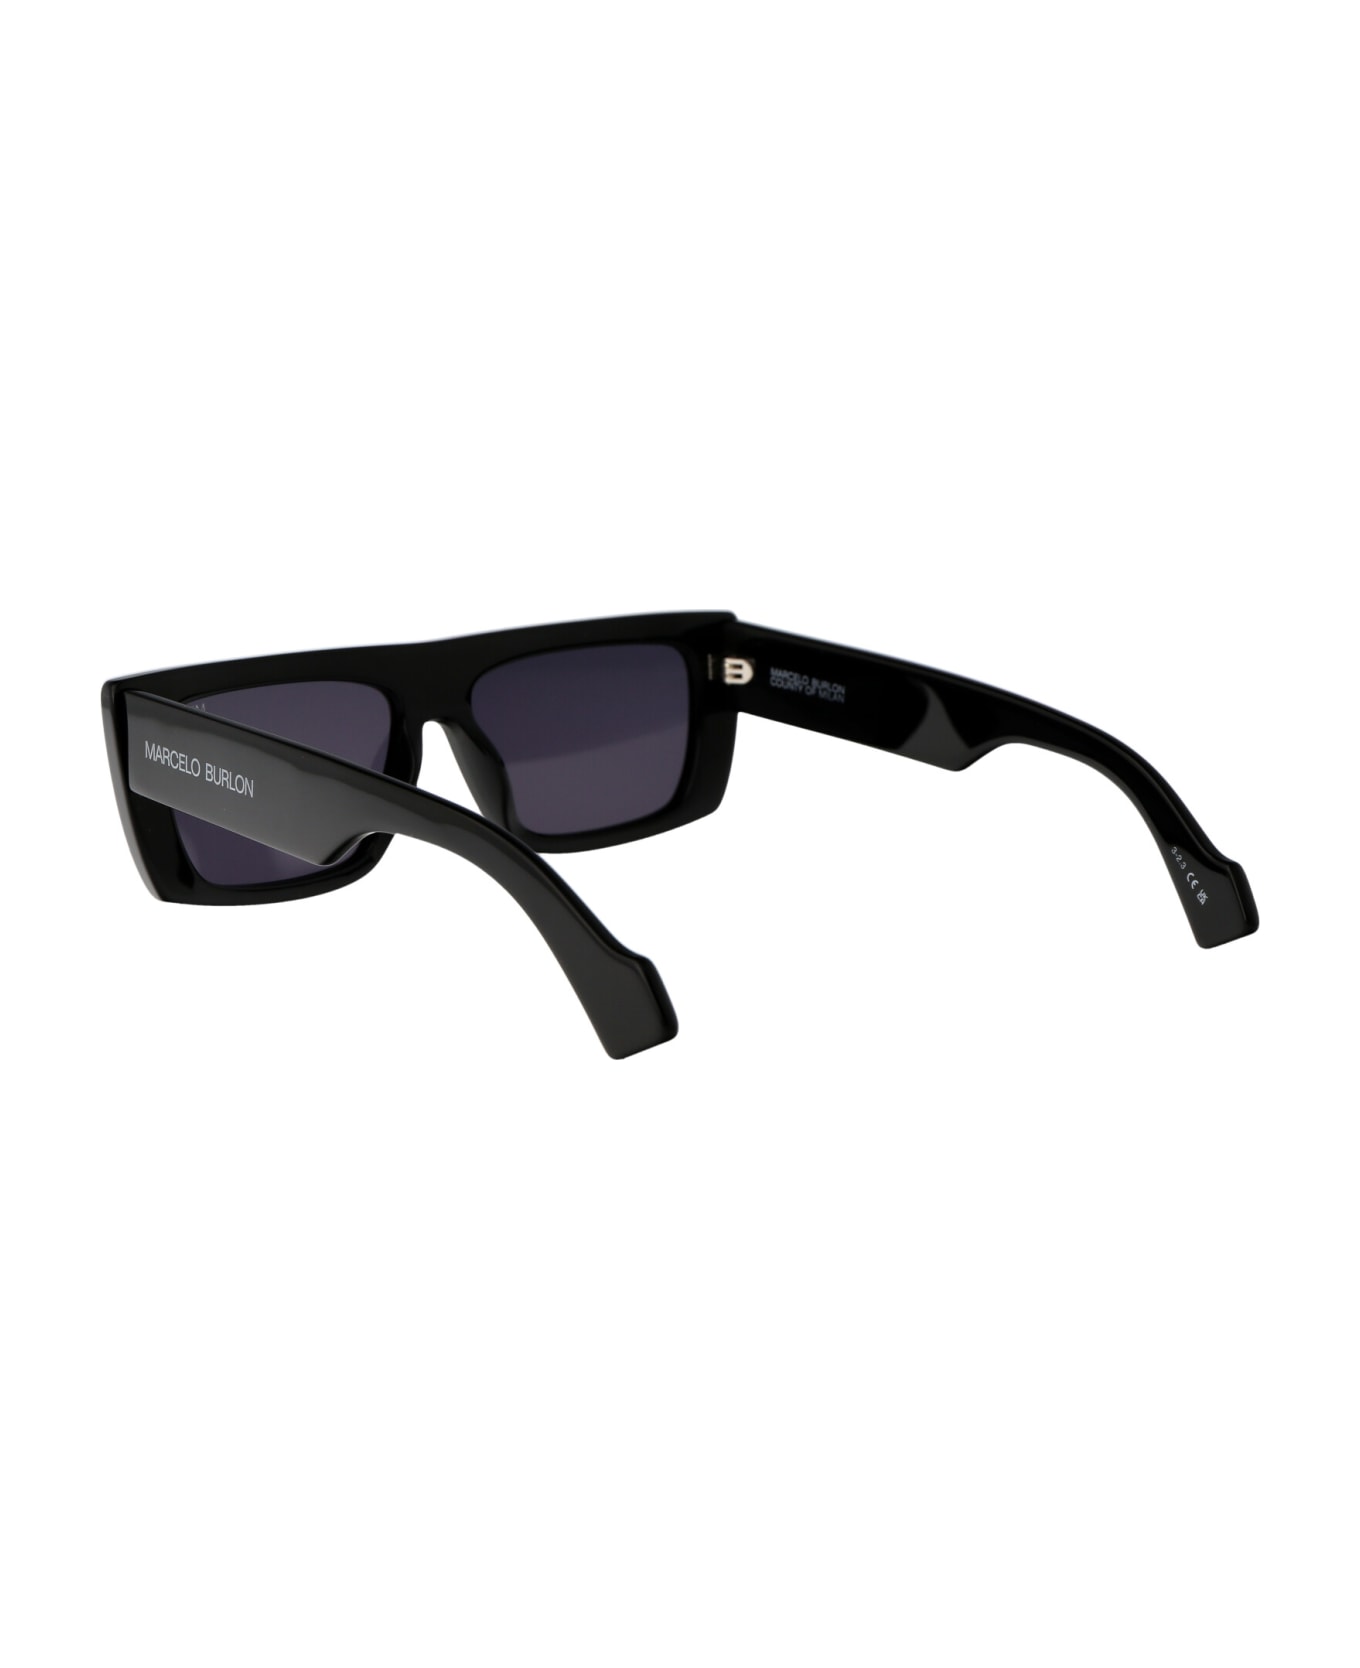 Marcelo Burlon Lebu Sunglasses - 1007 BLACK